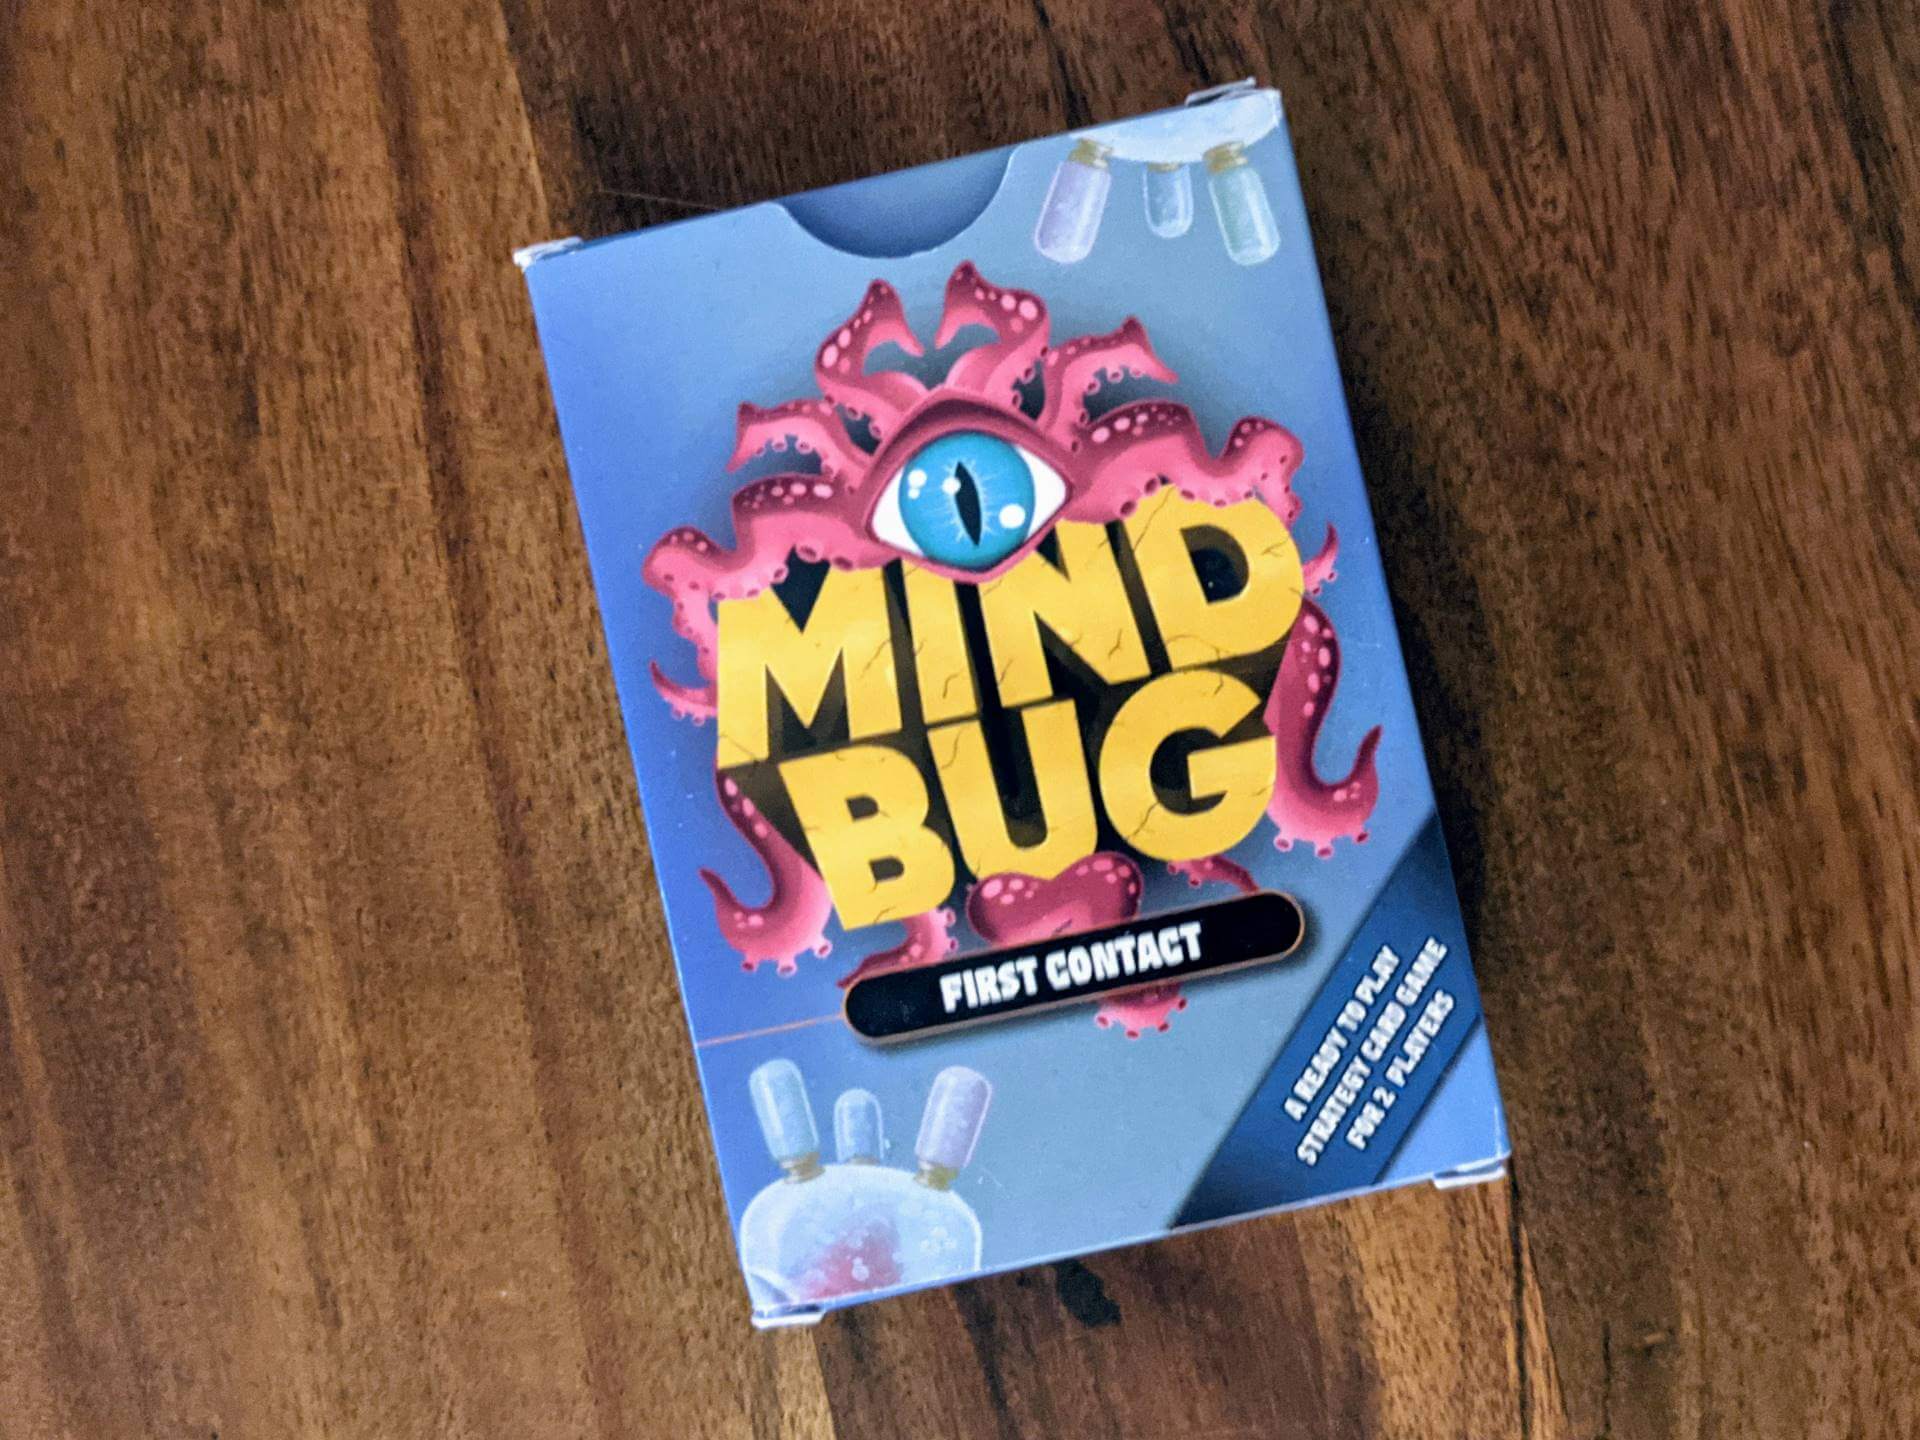 Mindbug Review